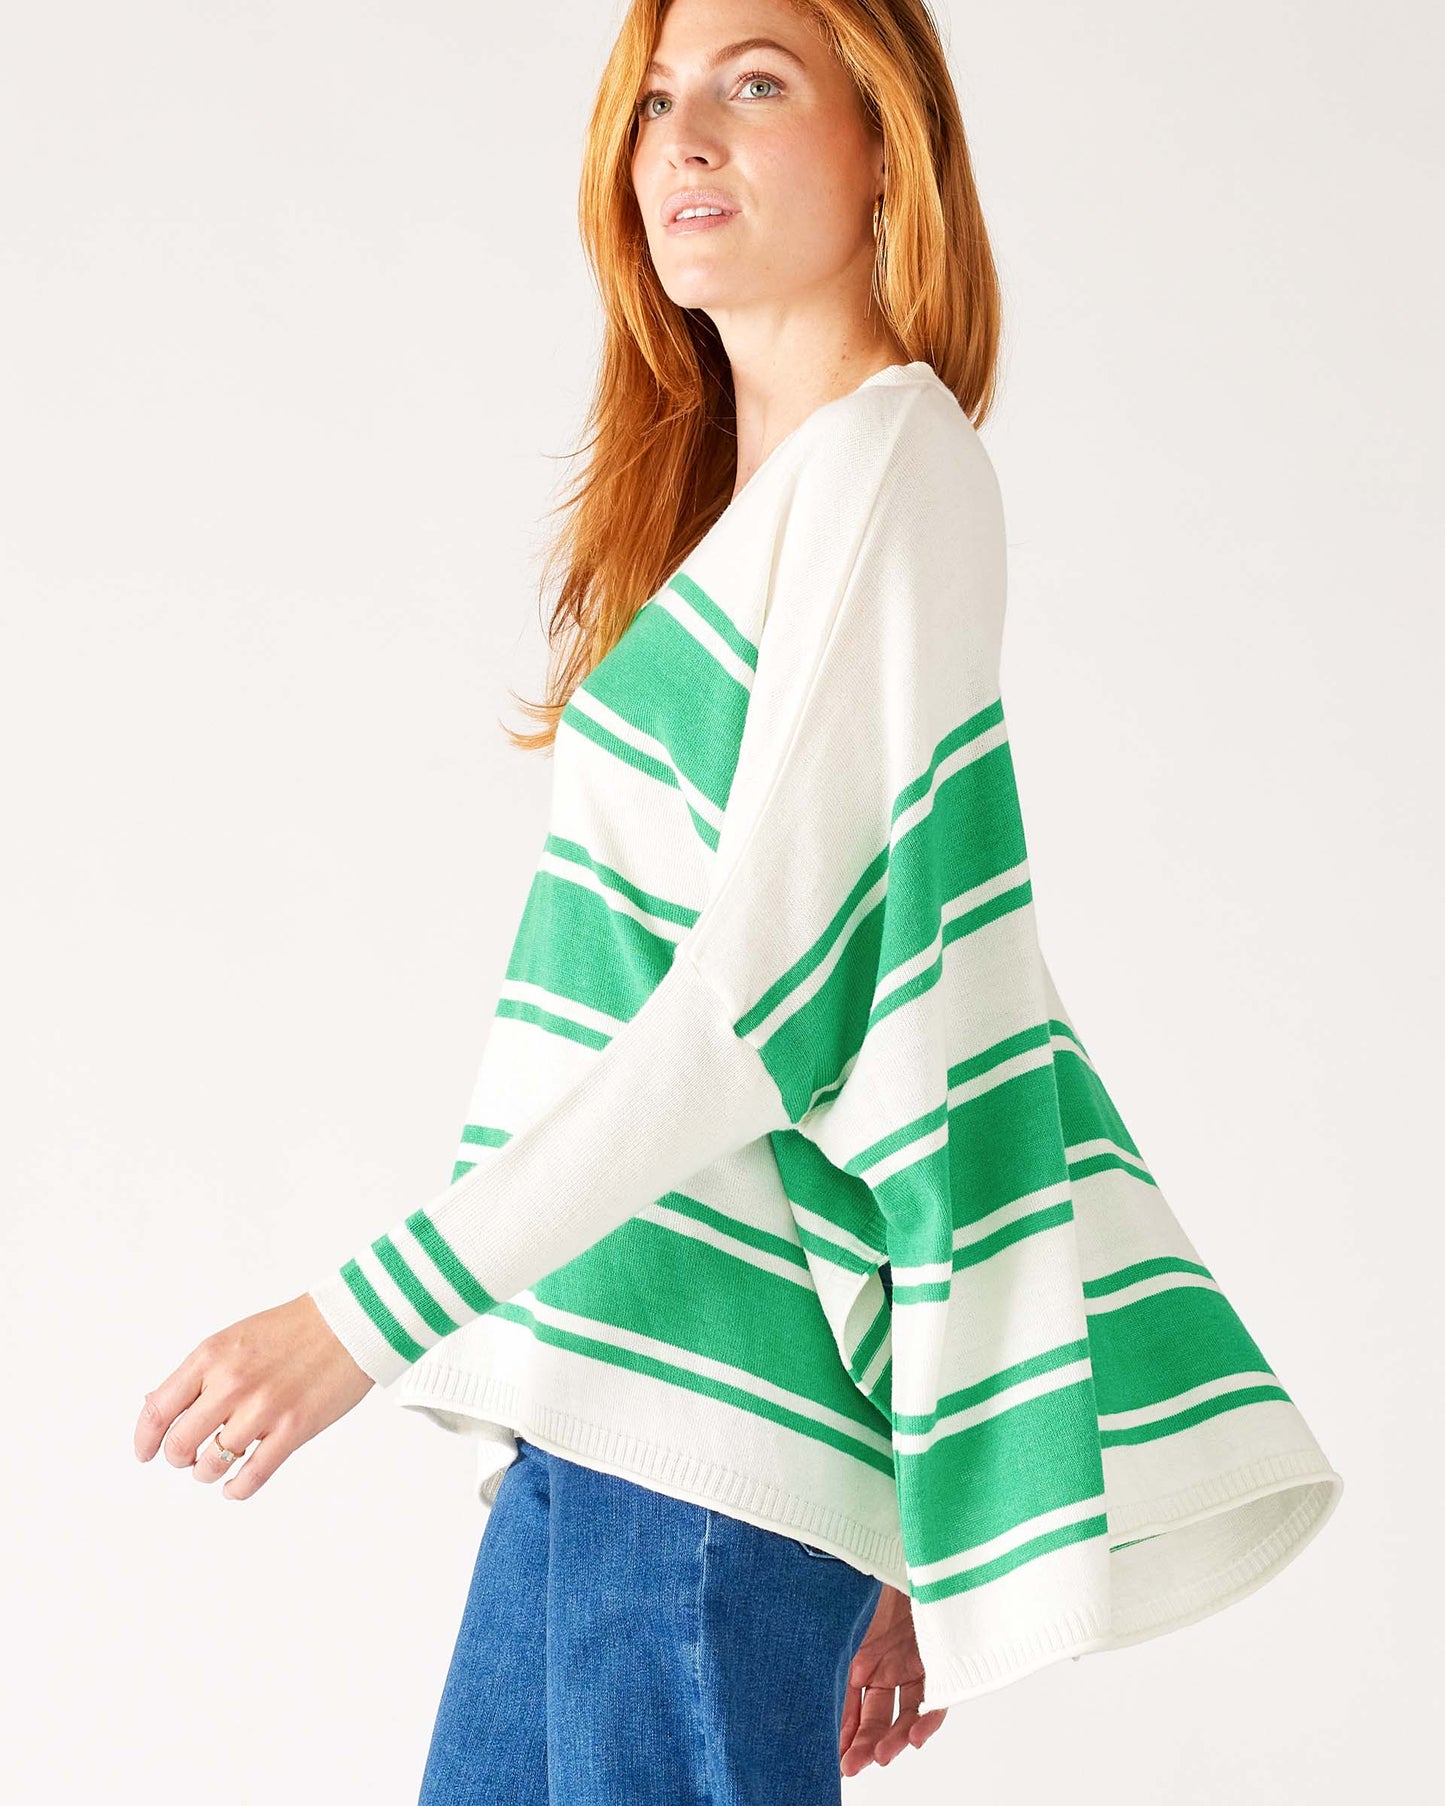 MerSea - Catalina V-Neck Sweater - White/Jade Stripe